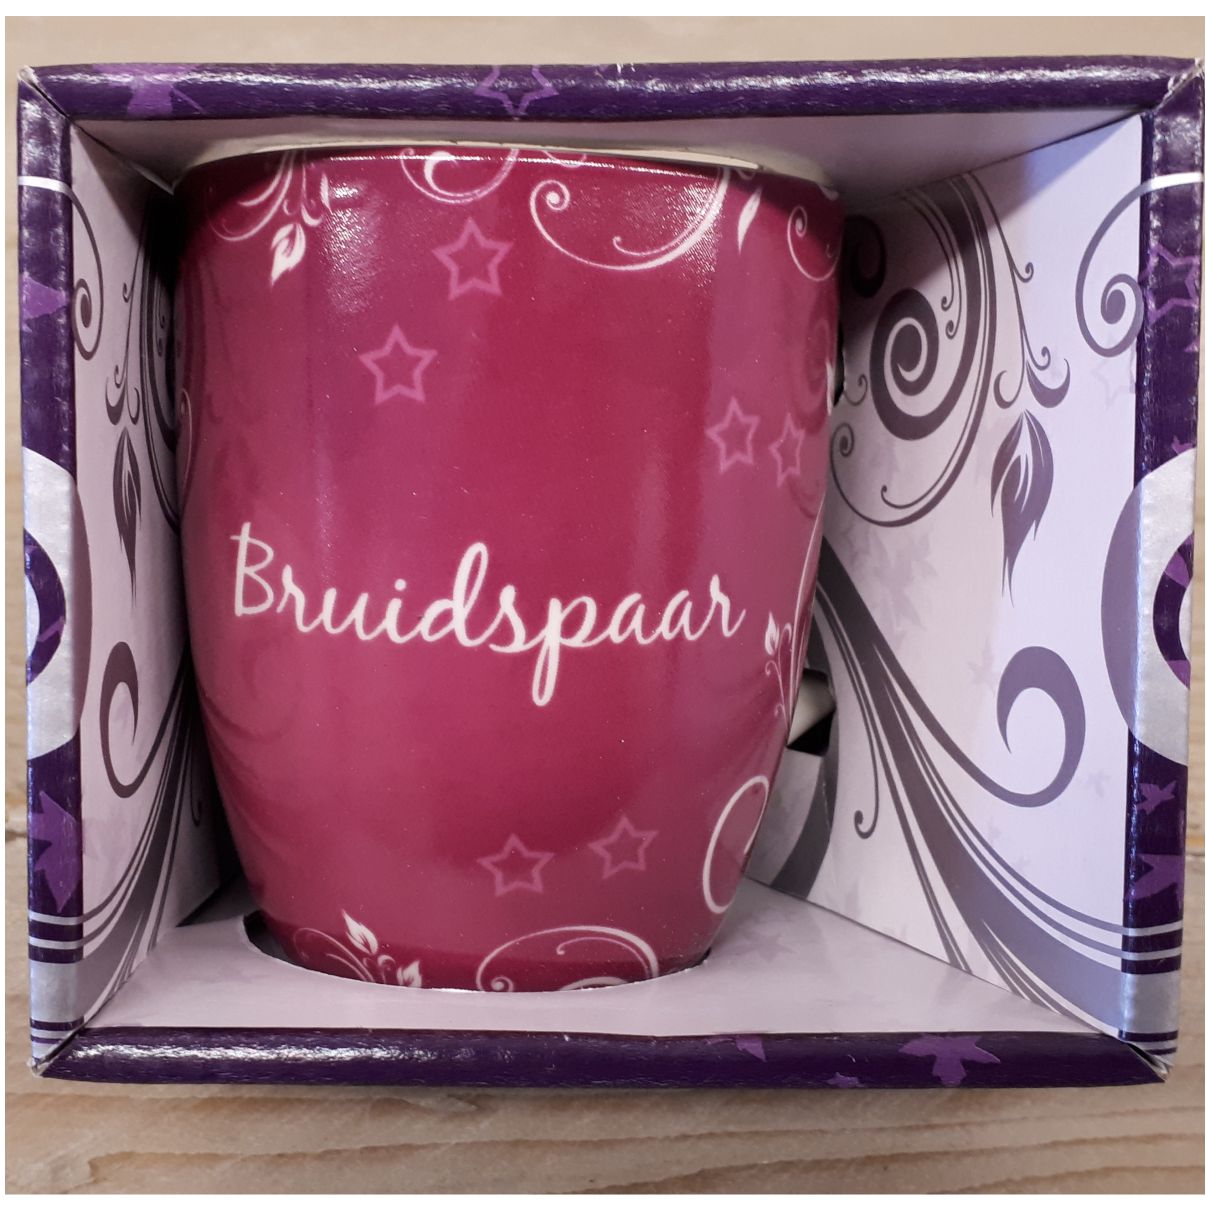 Mok bruidspaar roze in nette geschenkverpakking